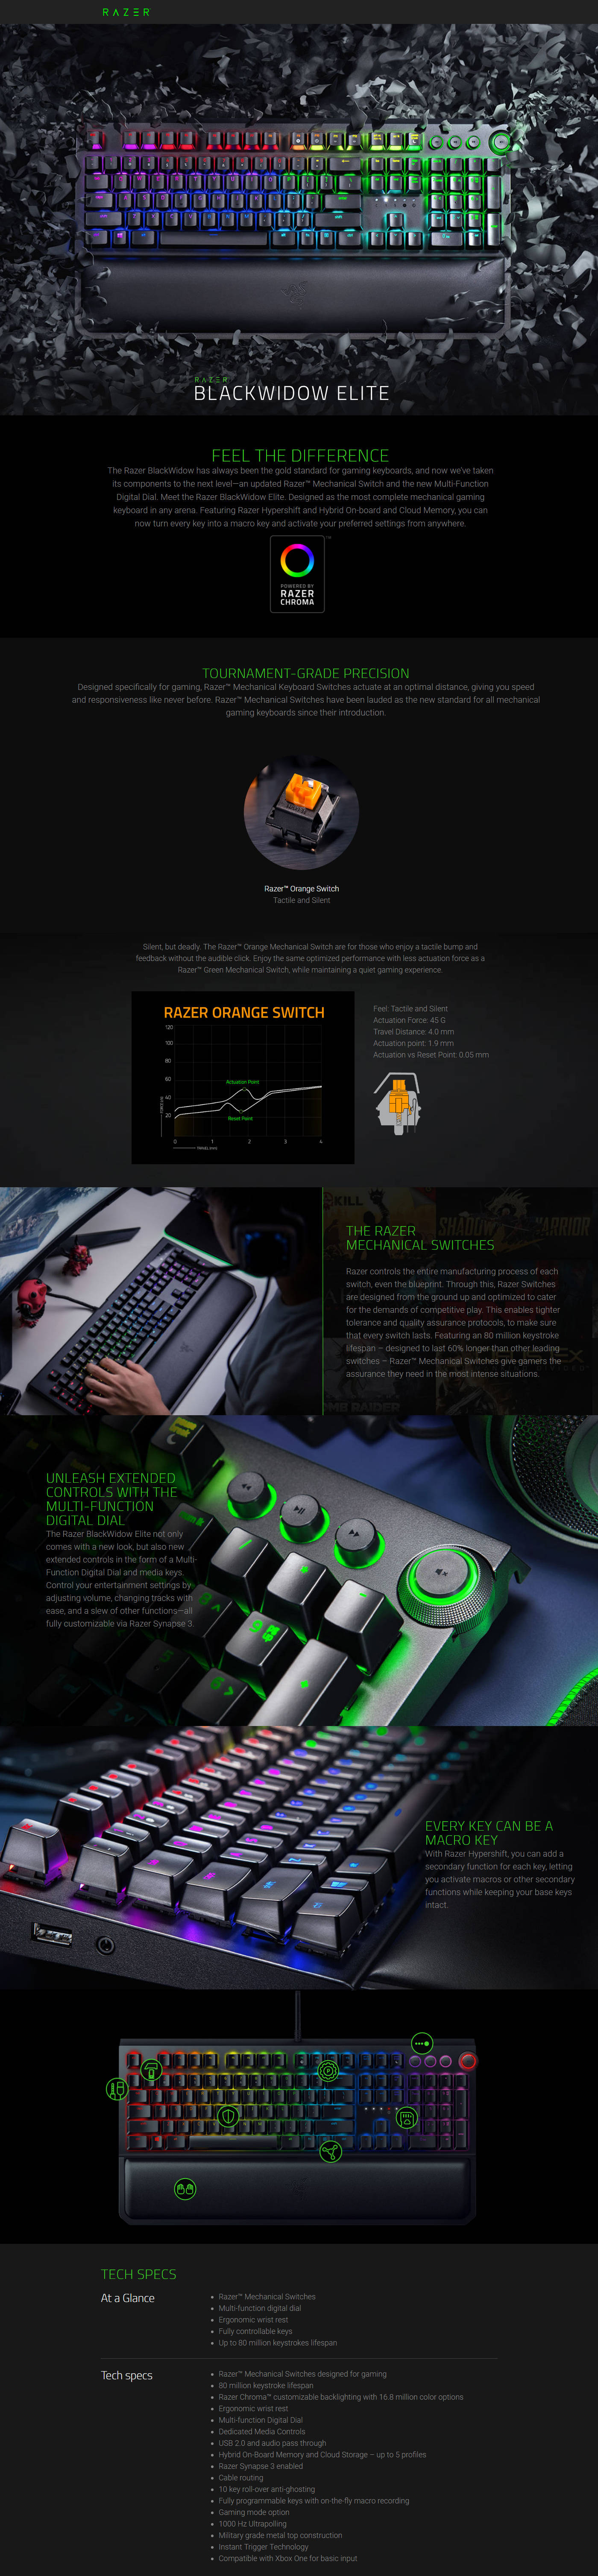  Buy Online Razer BlackWidow Elite Mechanical Gaming Keyboard - Orange Switch (RZ03-02621800-R3M1)